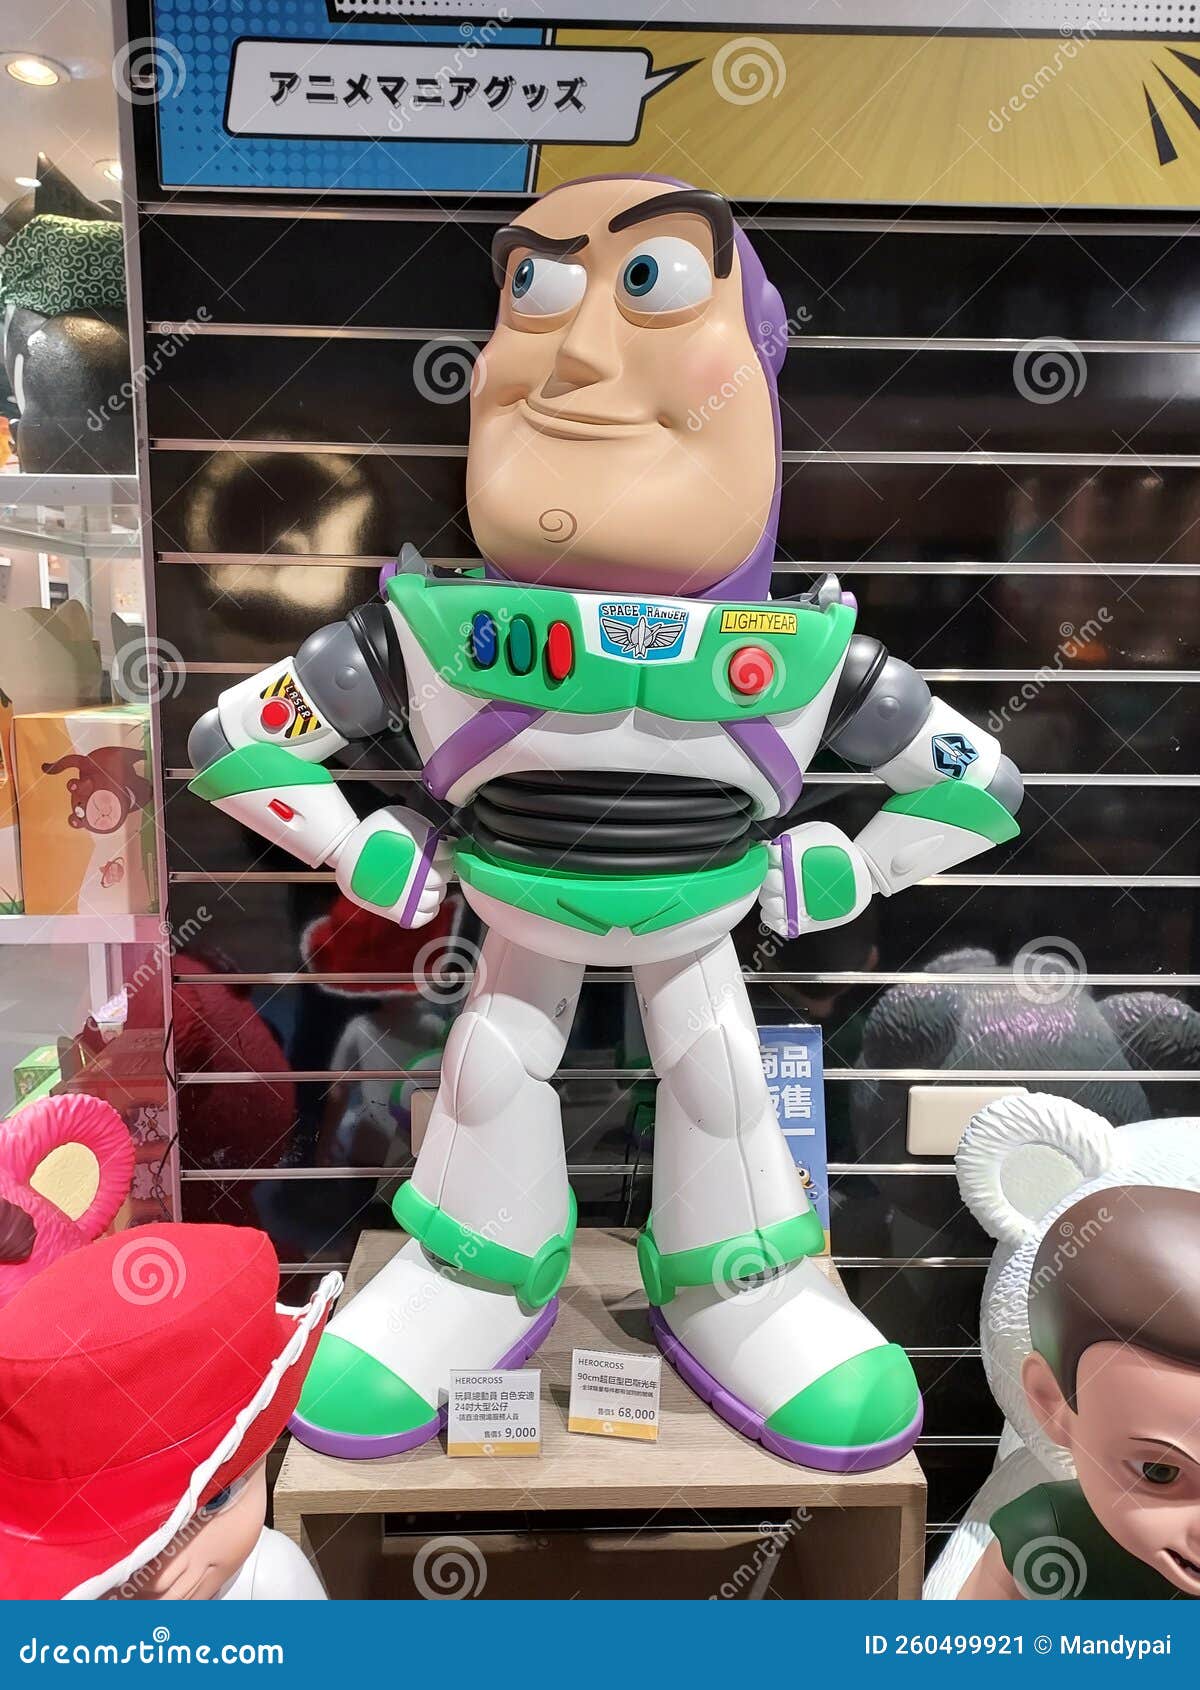 Pixar, Toy Story, Buzz Lightyear Figure Model. Editorial Photo - Image ...